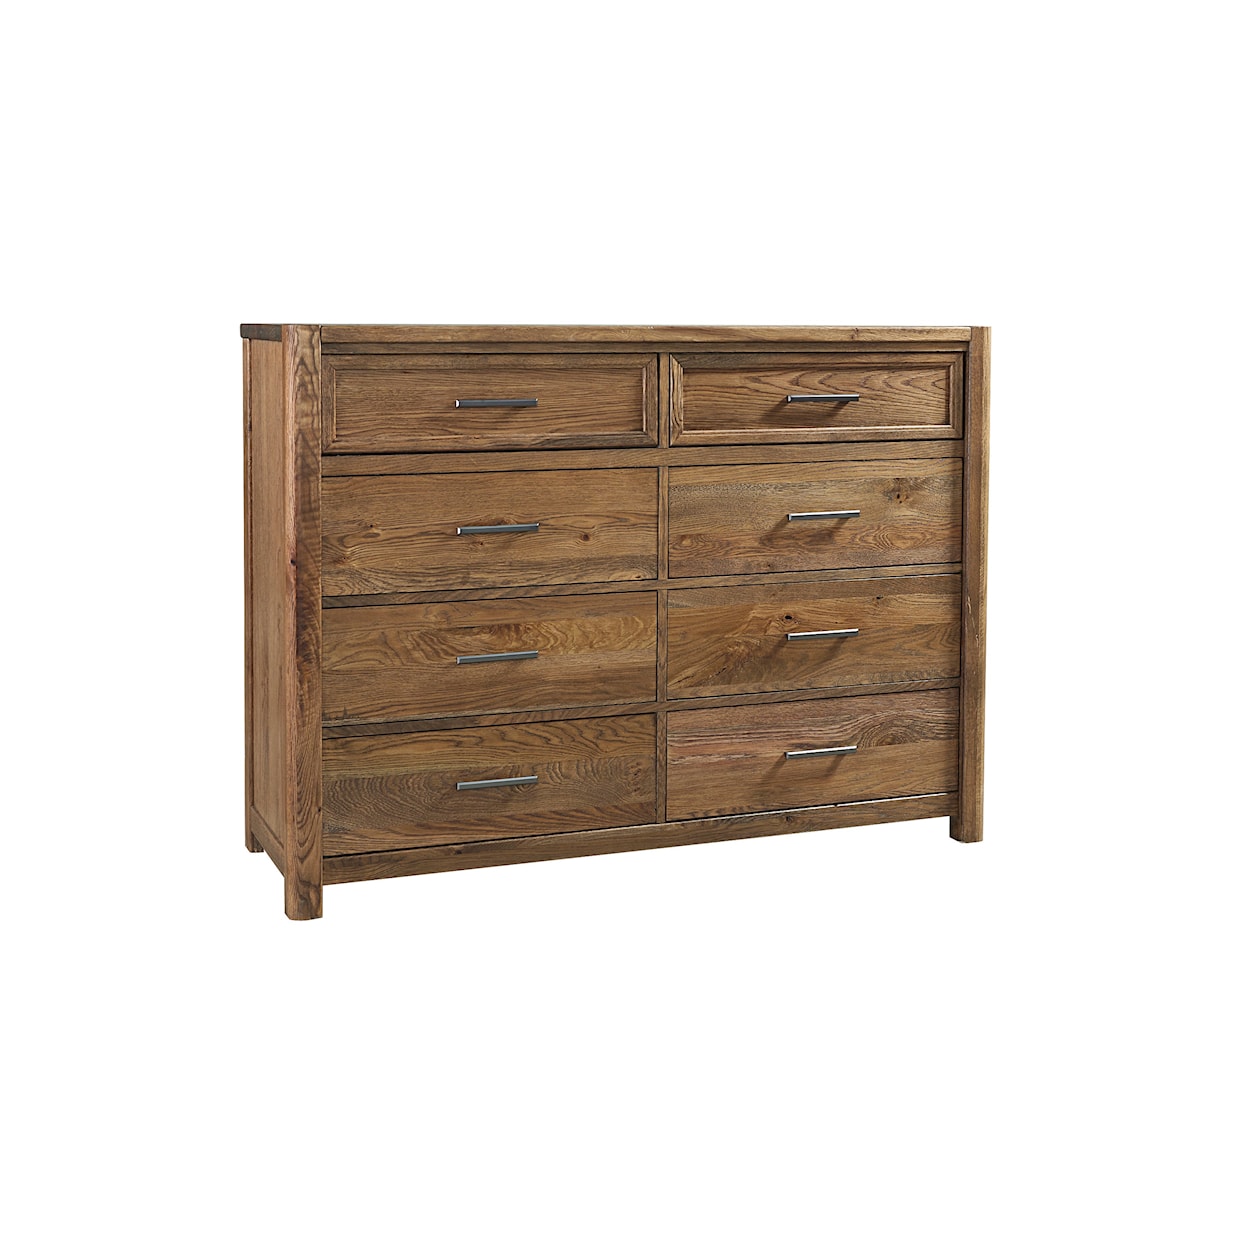 Vaughan-Bassett Charter Oak Bedroom Dresser